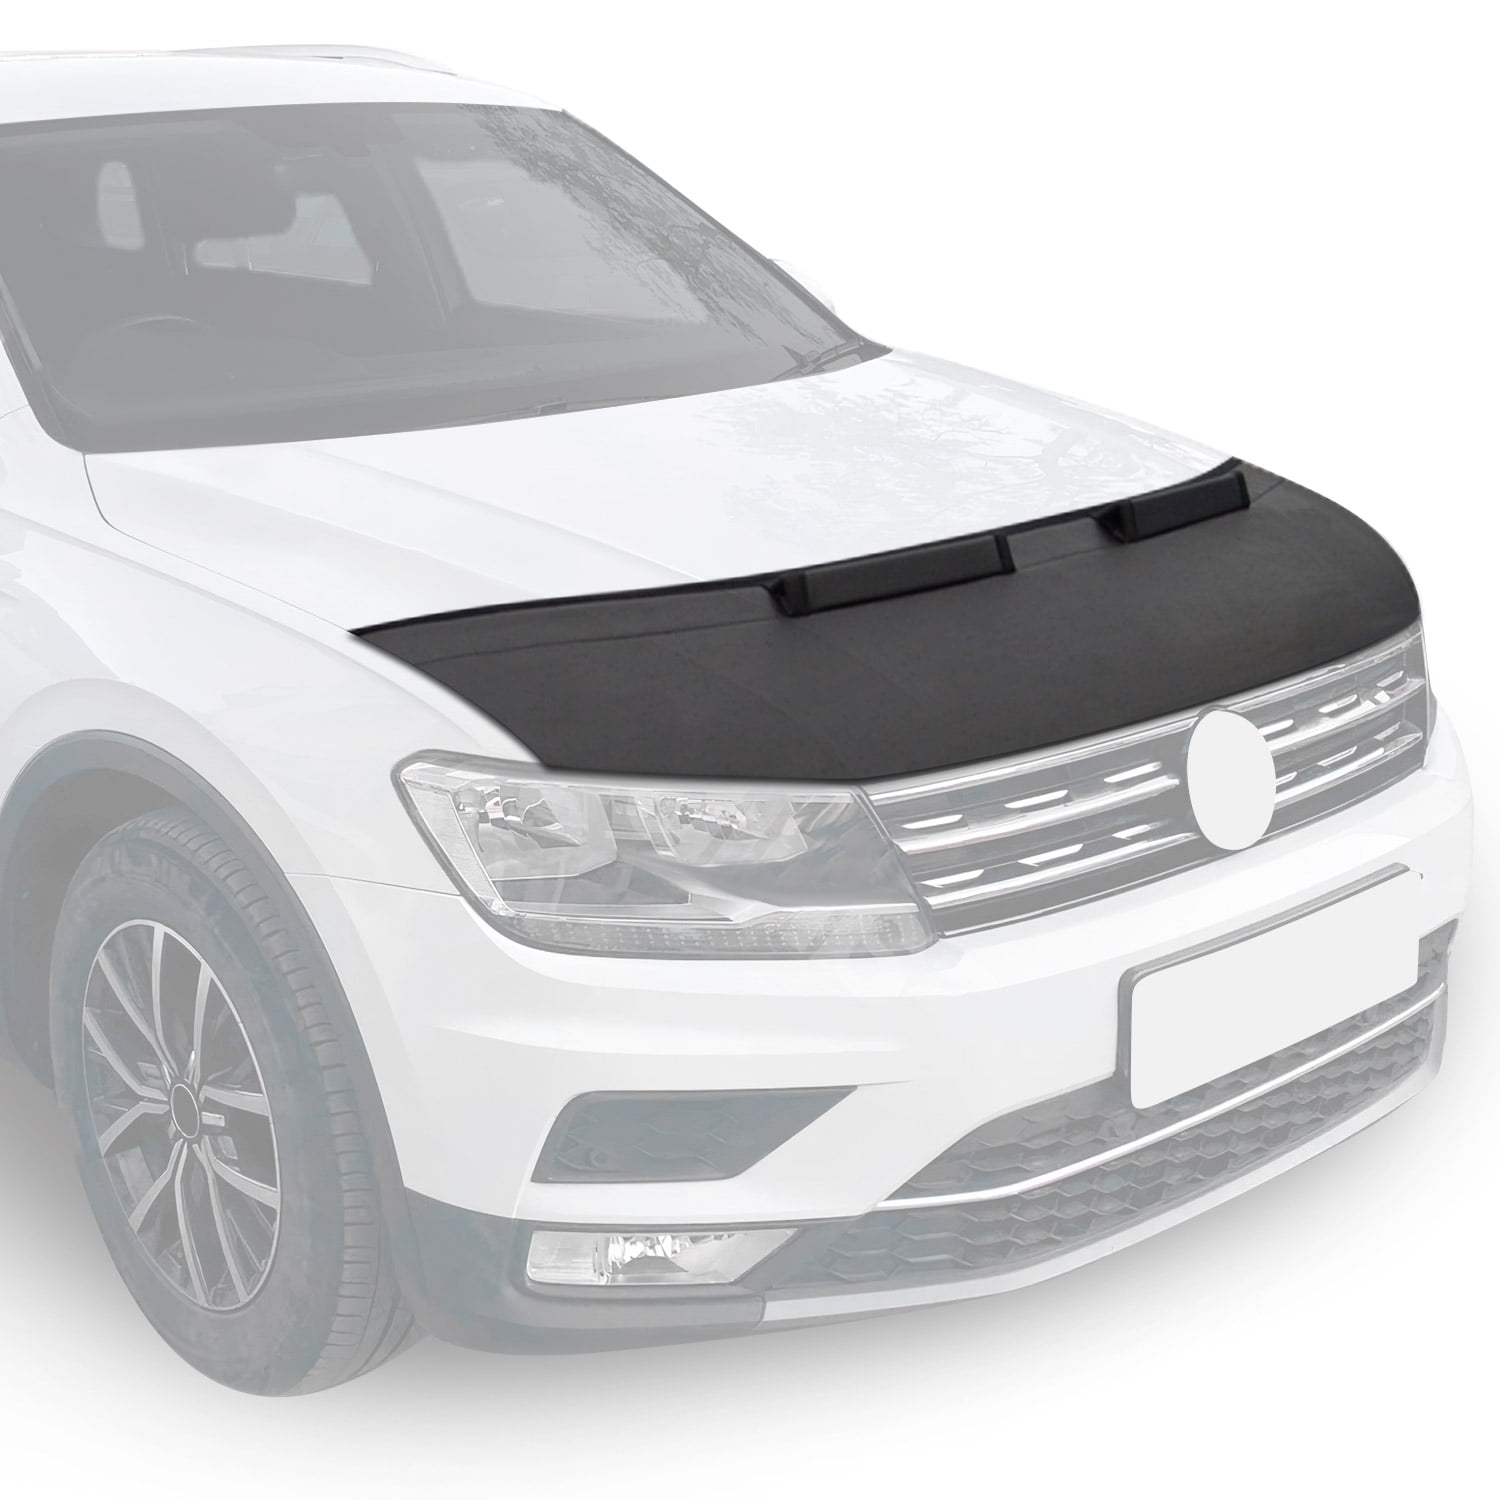 Carbon Fiber Style Gear Stick Shift Knob Cover Trim Protector for Toyota  Yaris/Yaris Cross Hybrid 2020-2023